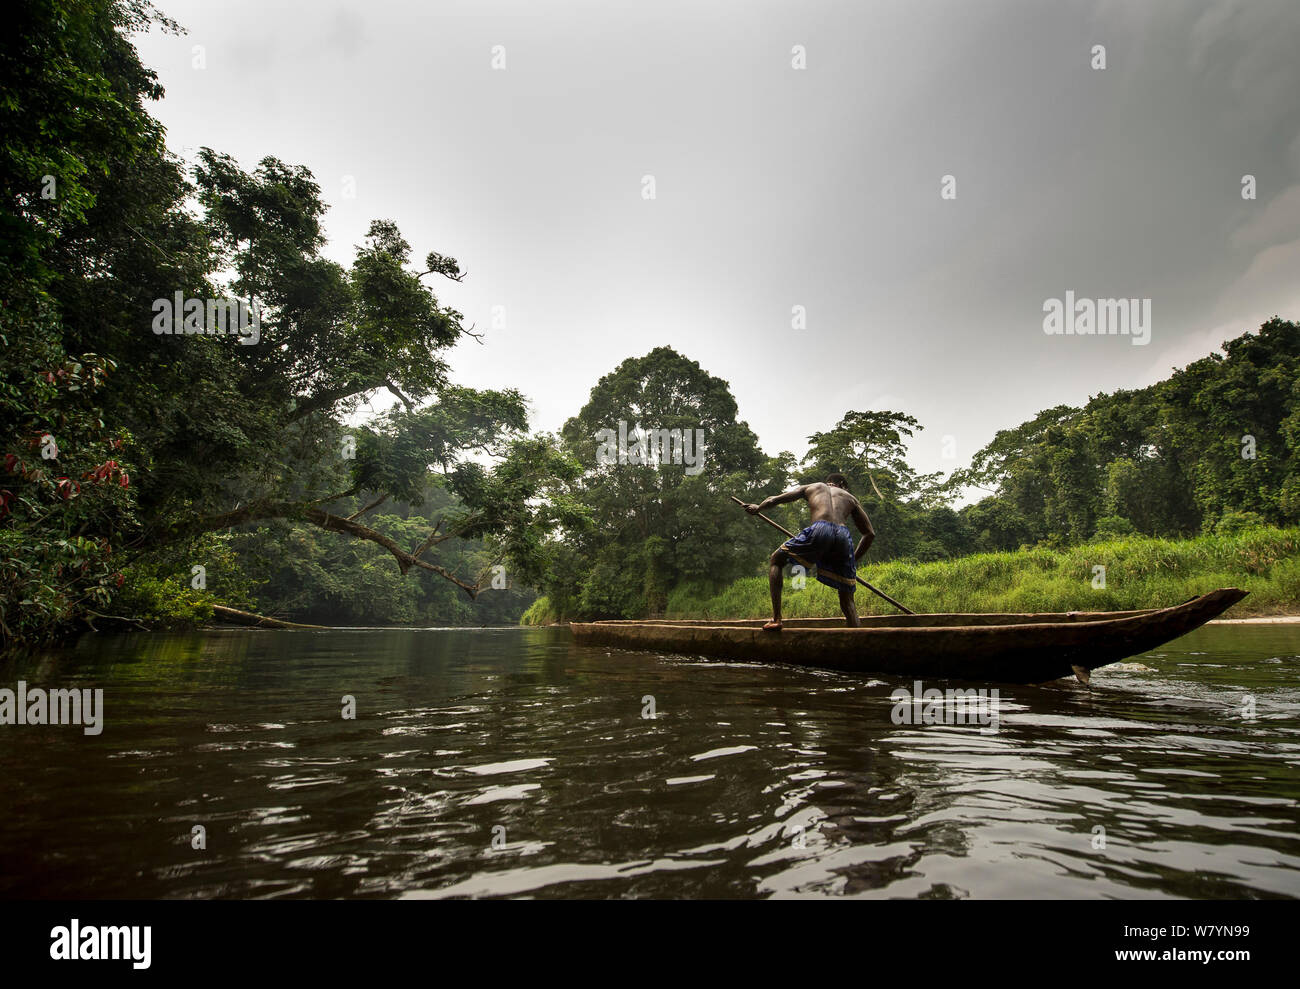 Fisherman on river, Salonga National Park, Democratic Republic of Congo. September 2009. Stock Photo